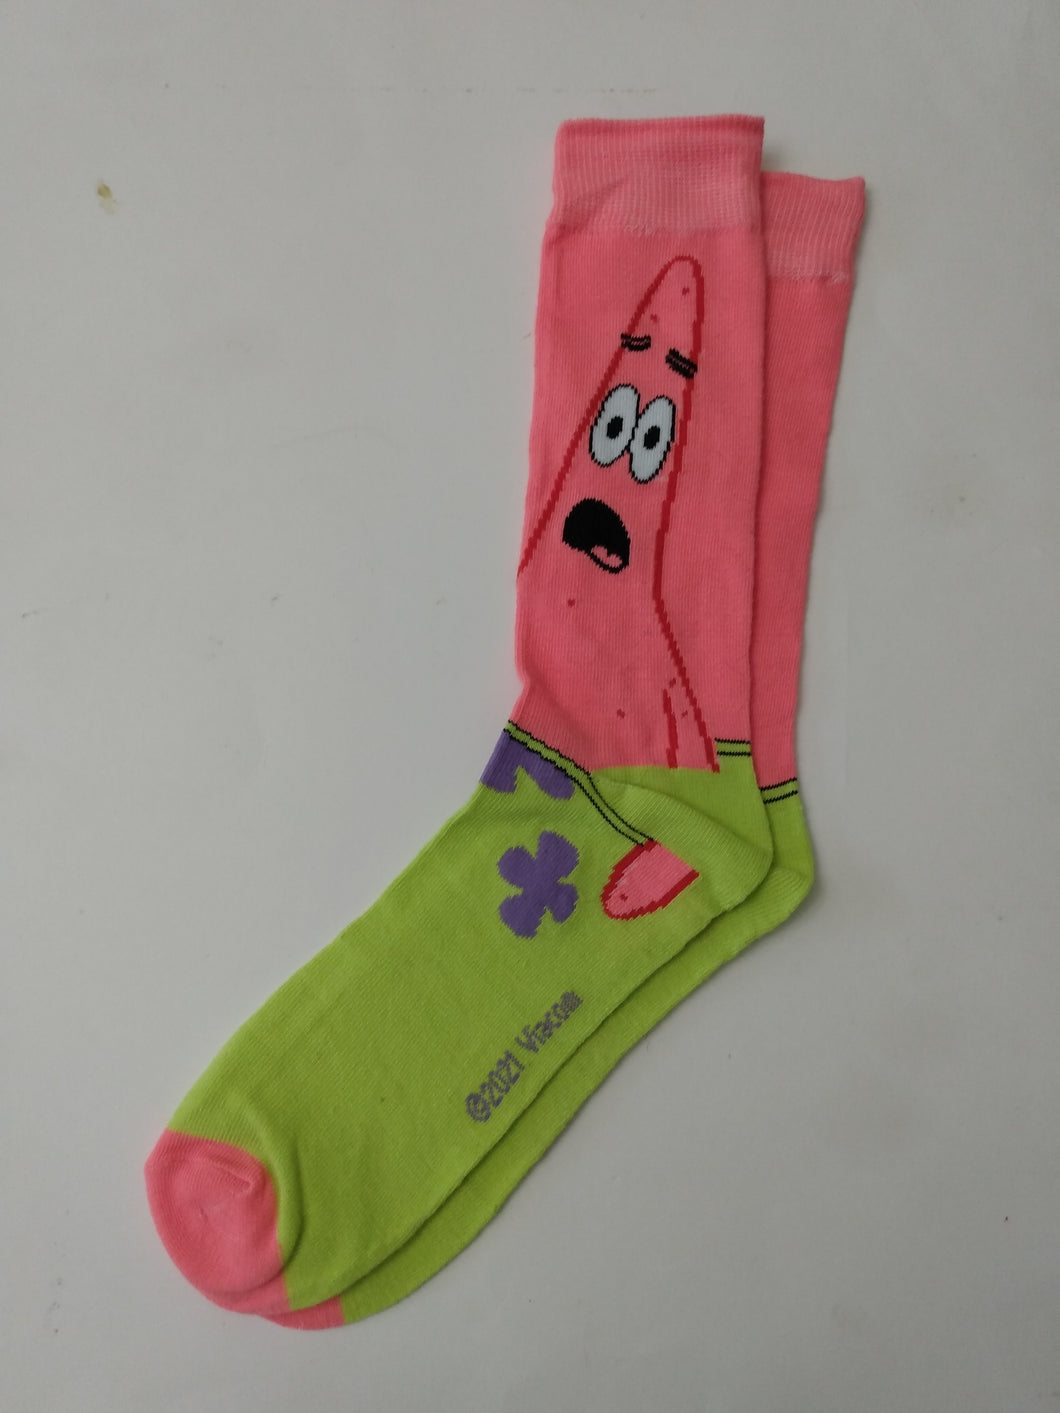 Patrick Star Pink Spongebob SquarePants Crew Socks